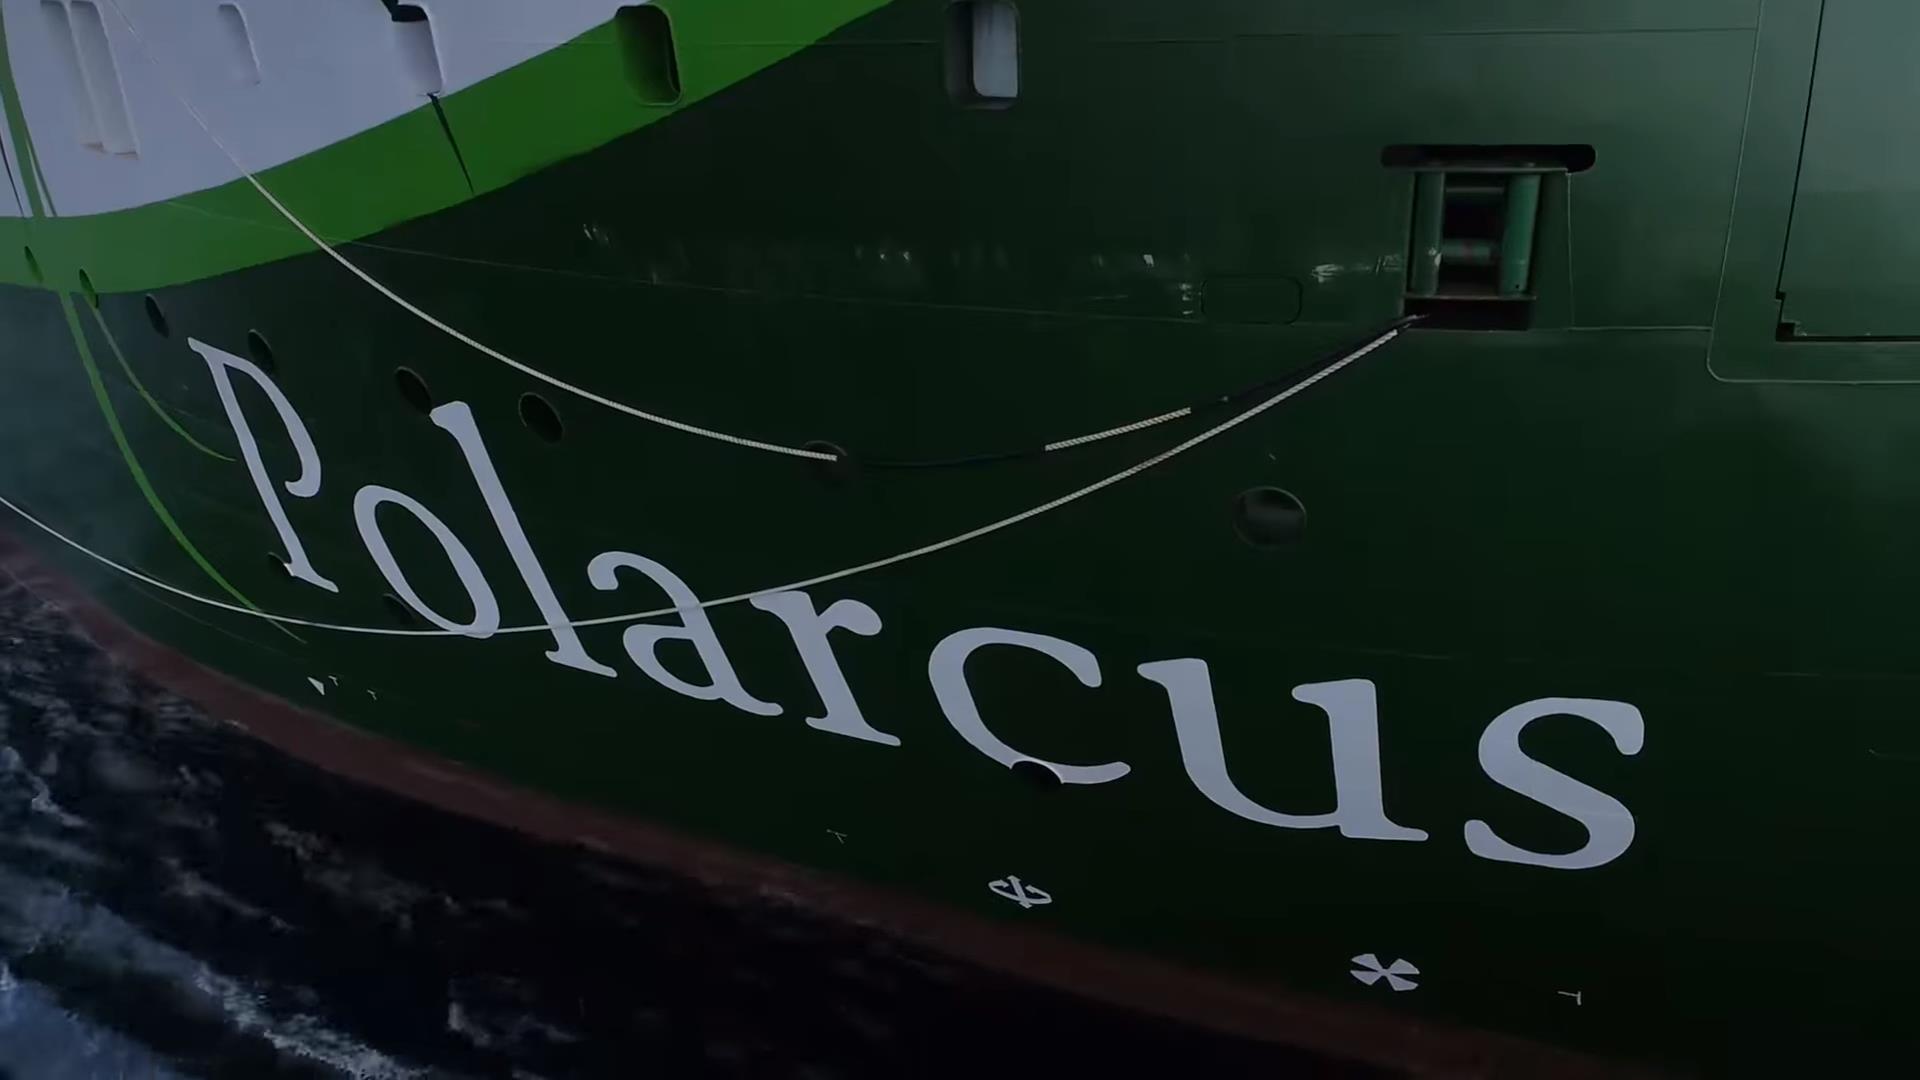 Polarcus vessel